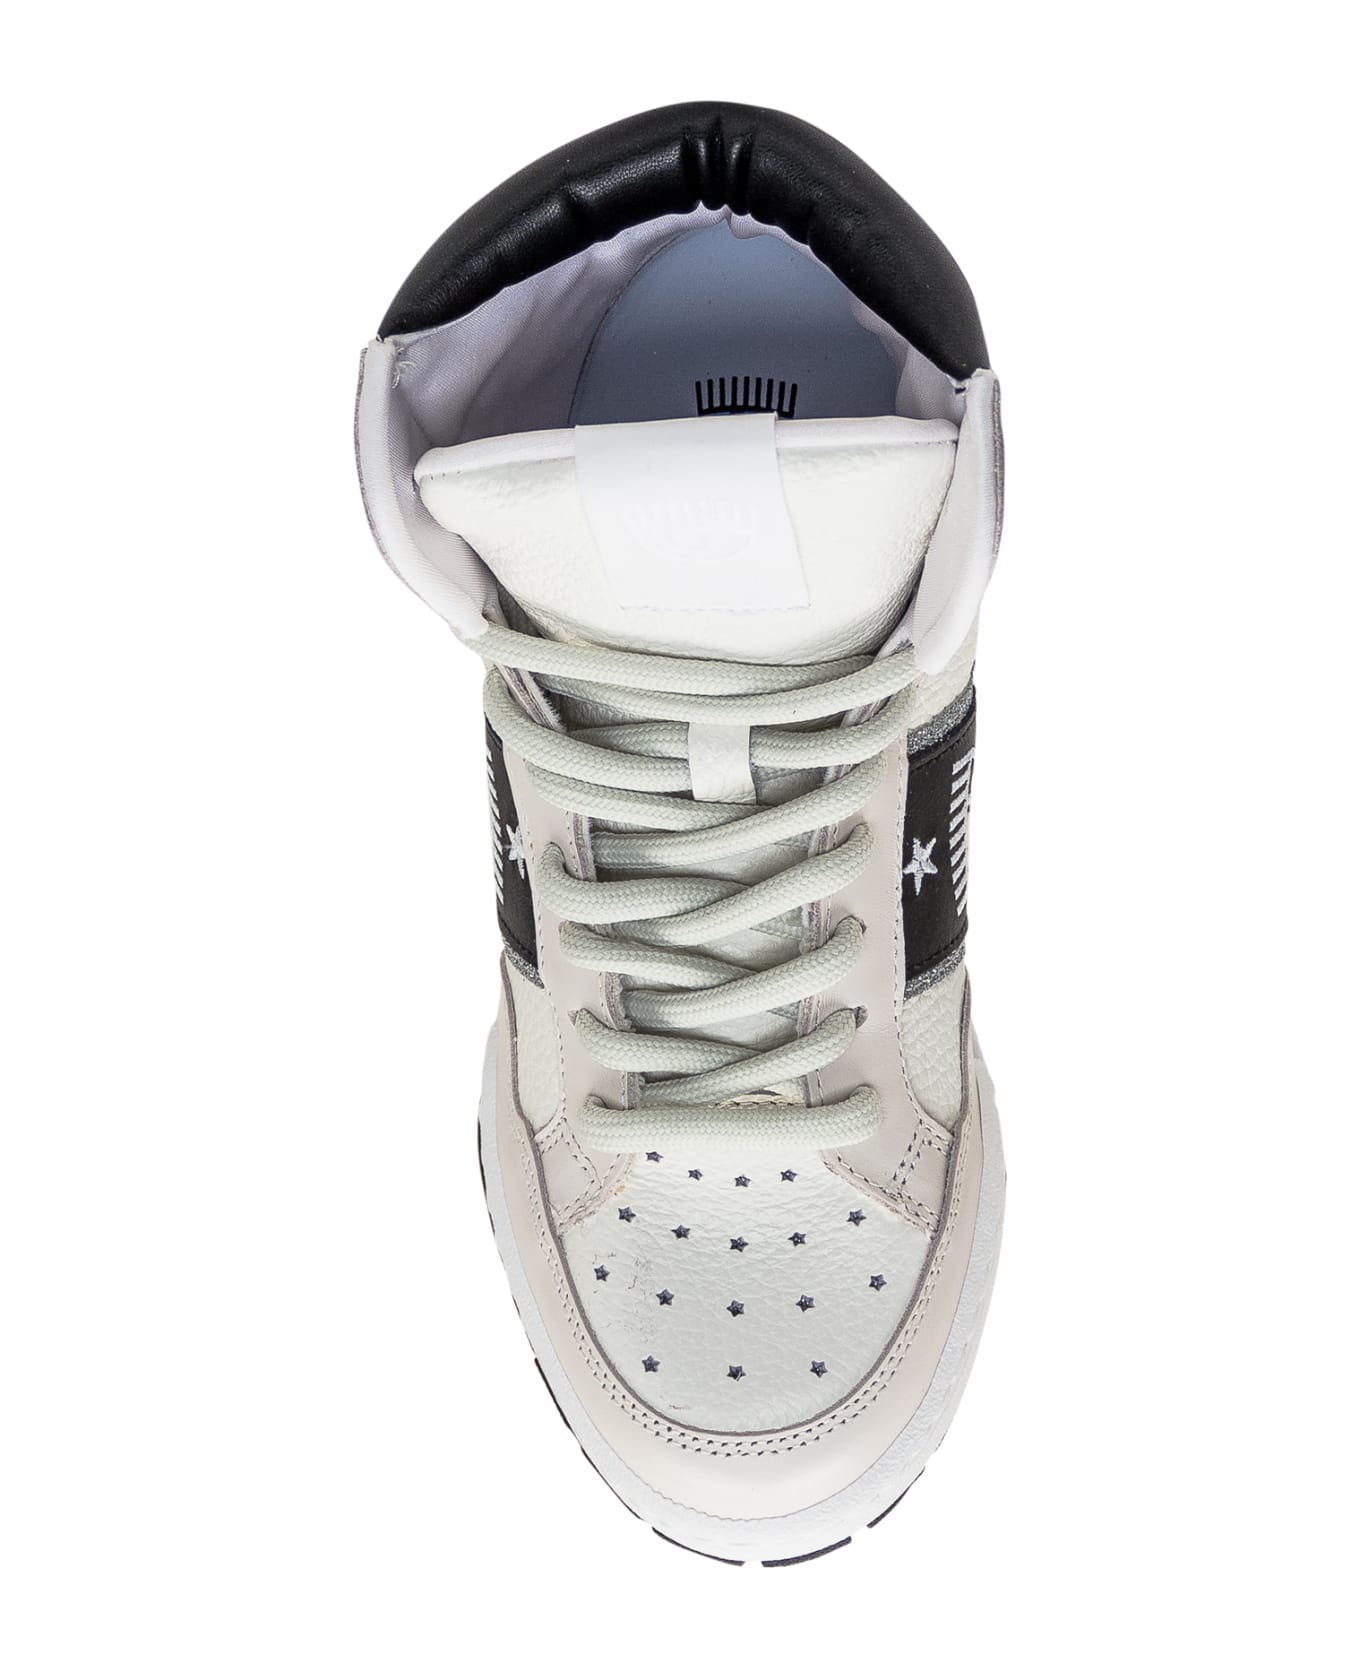 Chiara Ferragni Cf-1 Sneaker - WHITE-BLACK